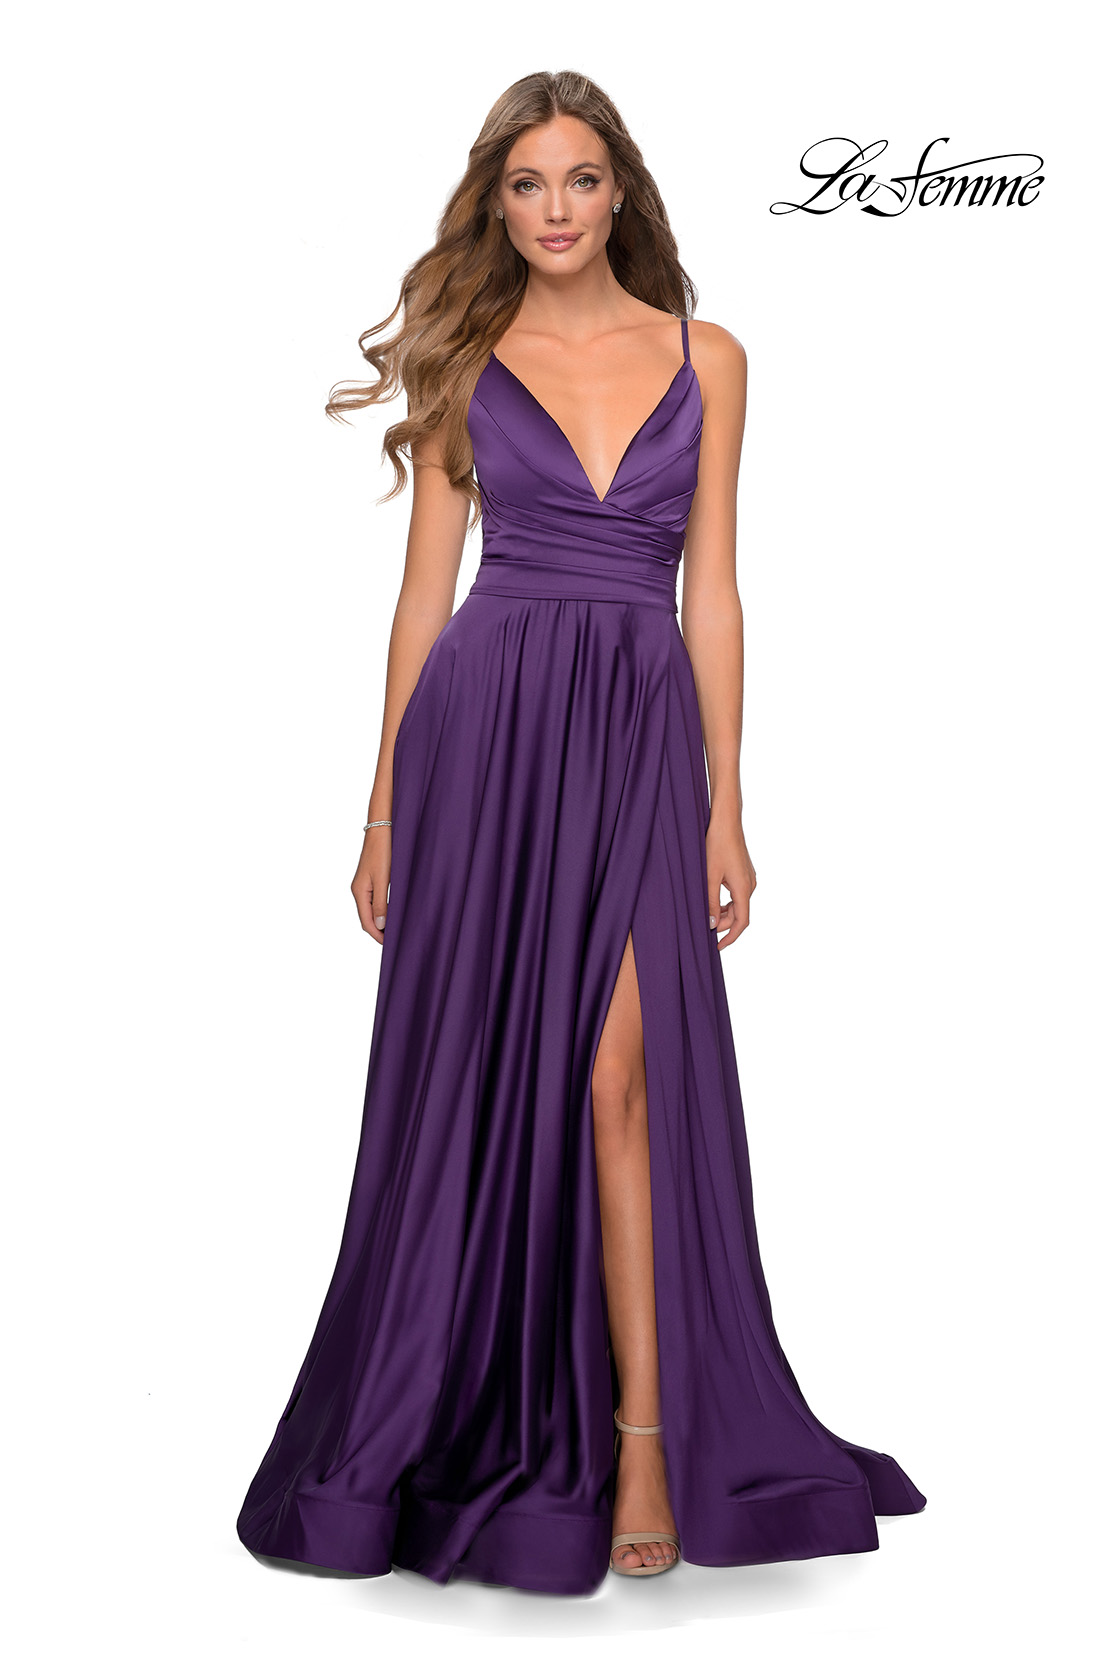 electric purple dress